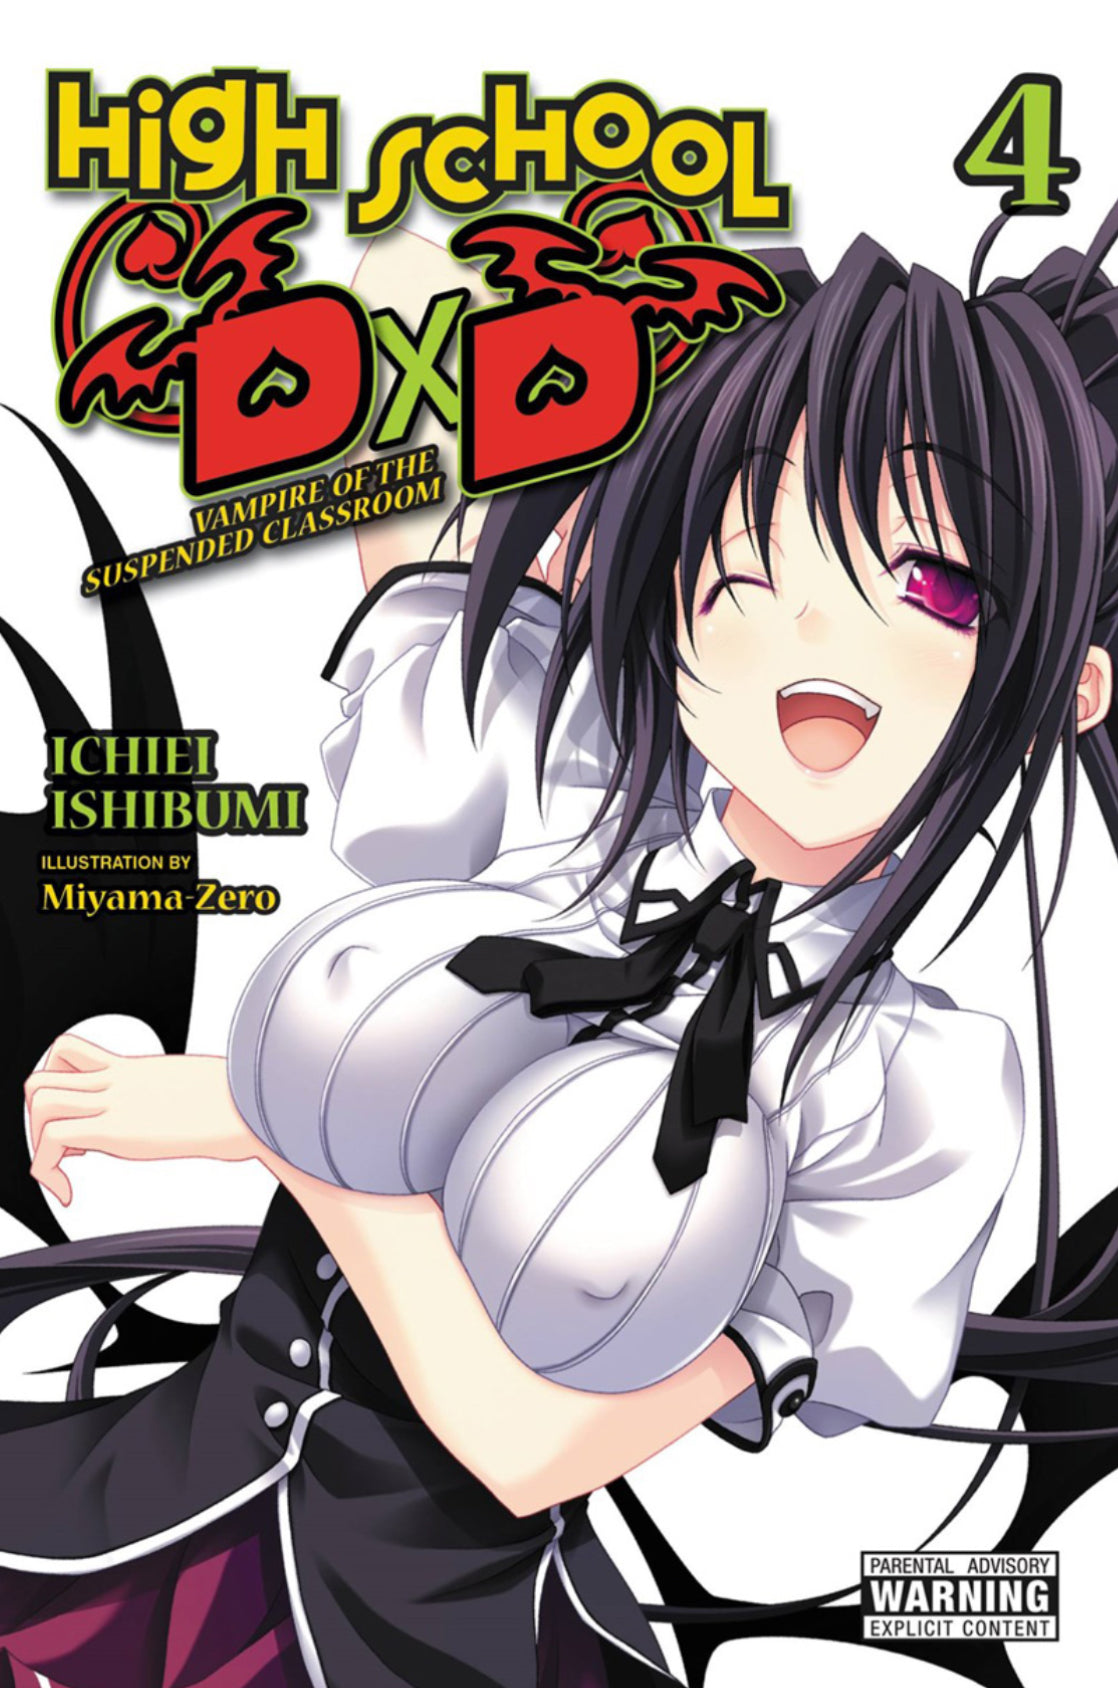 High School DxD Novel Volume 4 Vampire of the Suspended Classroom Manga